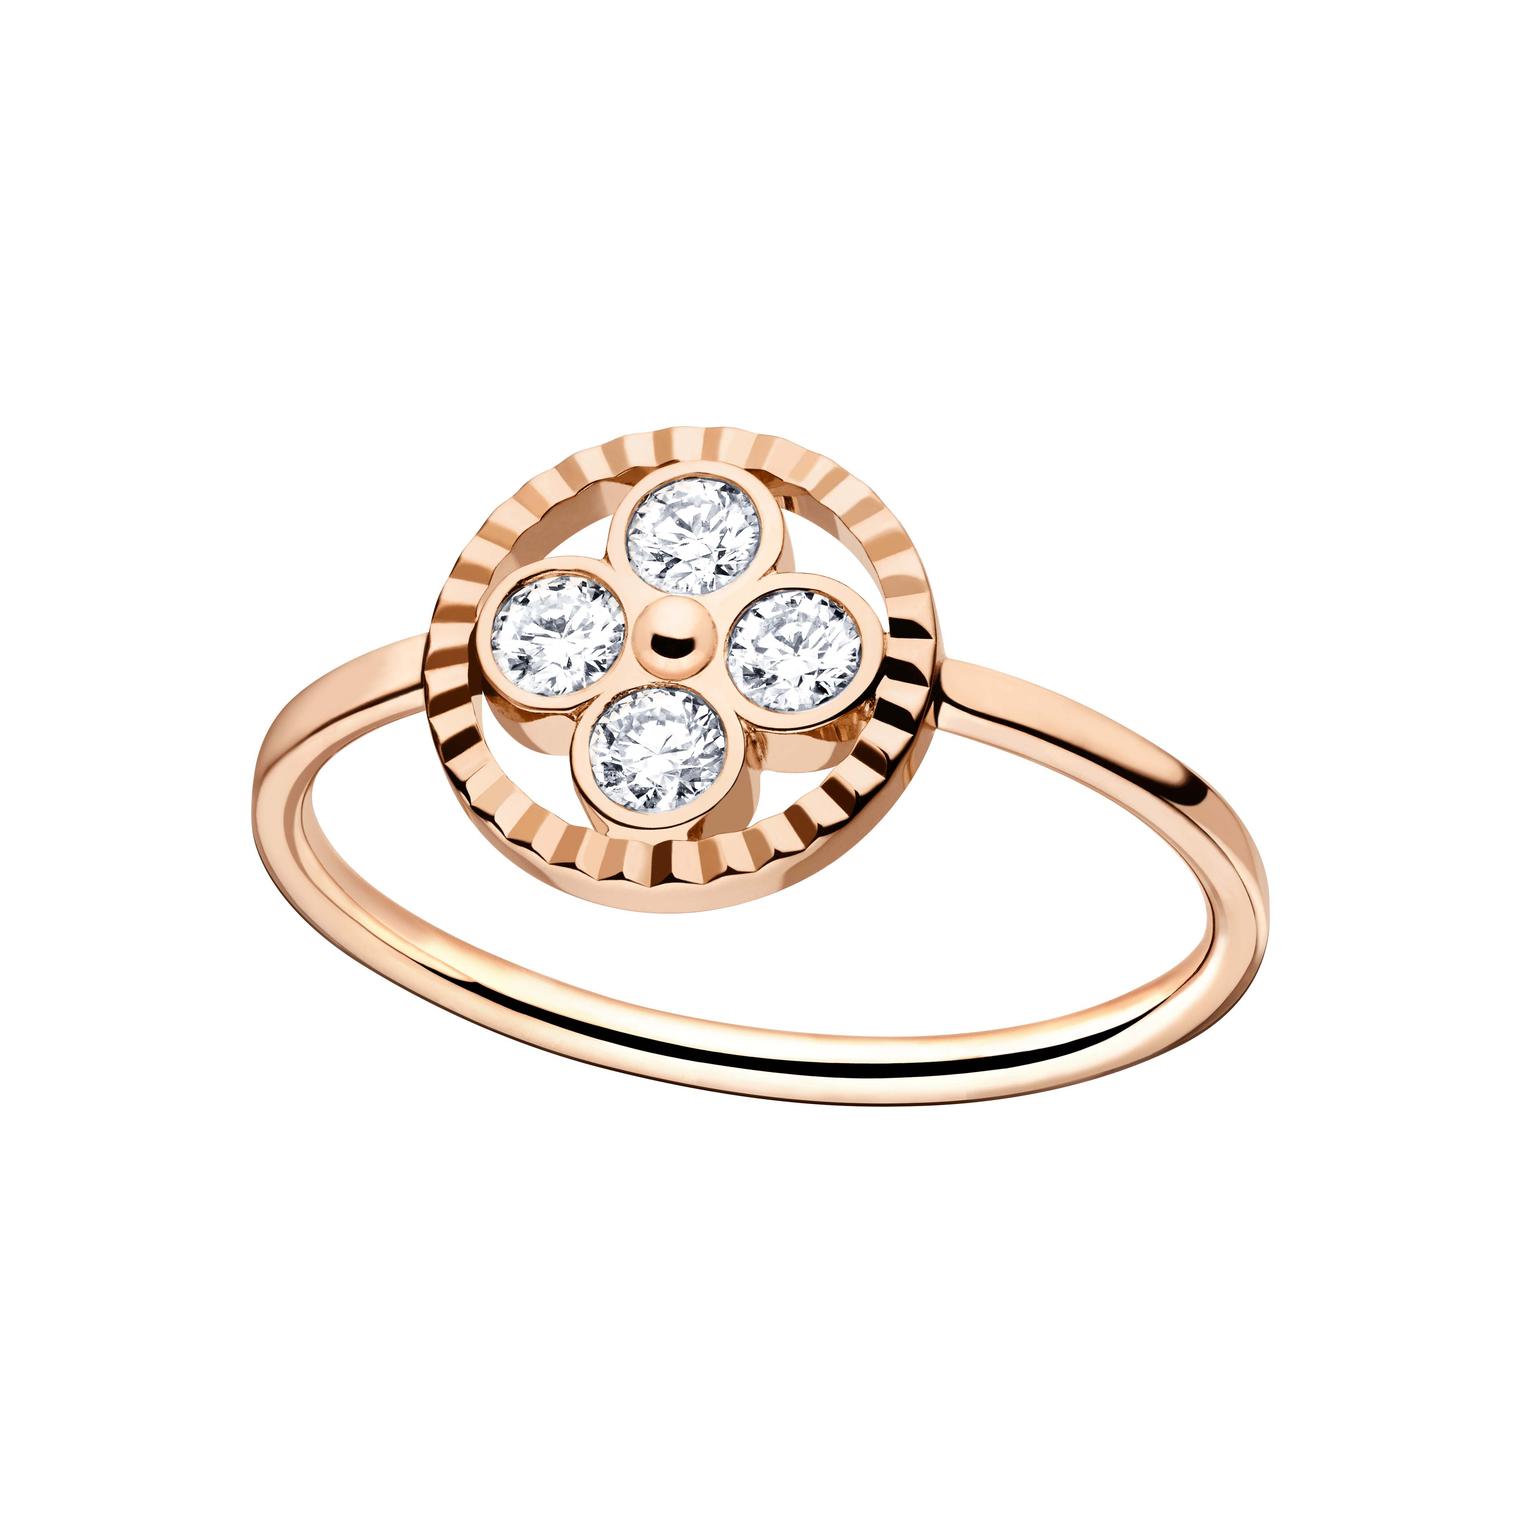 Louis Vuitton Monogram Sun ring in rose gold and diamonds.